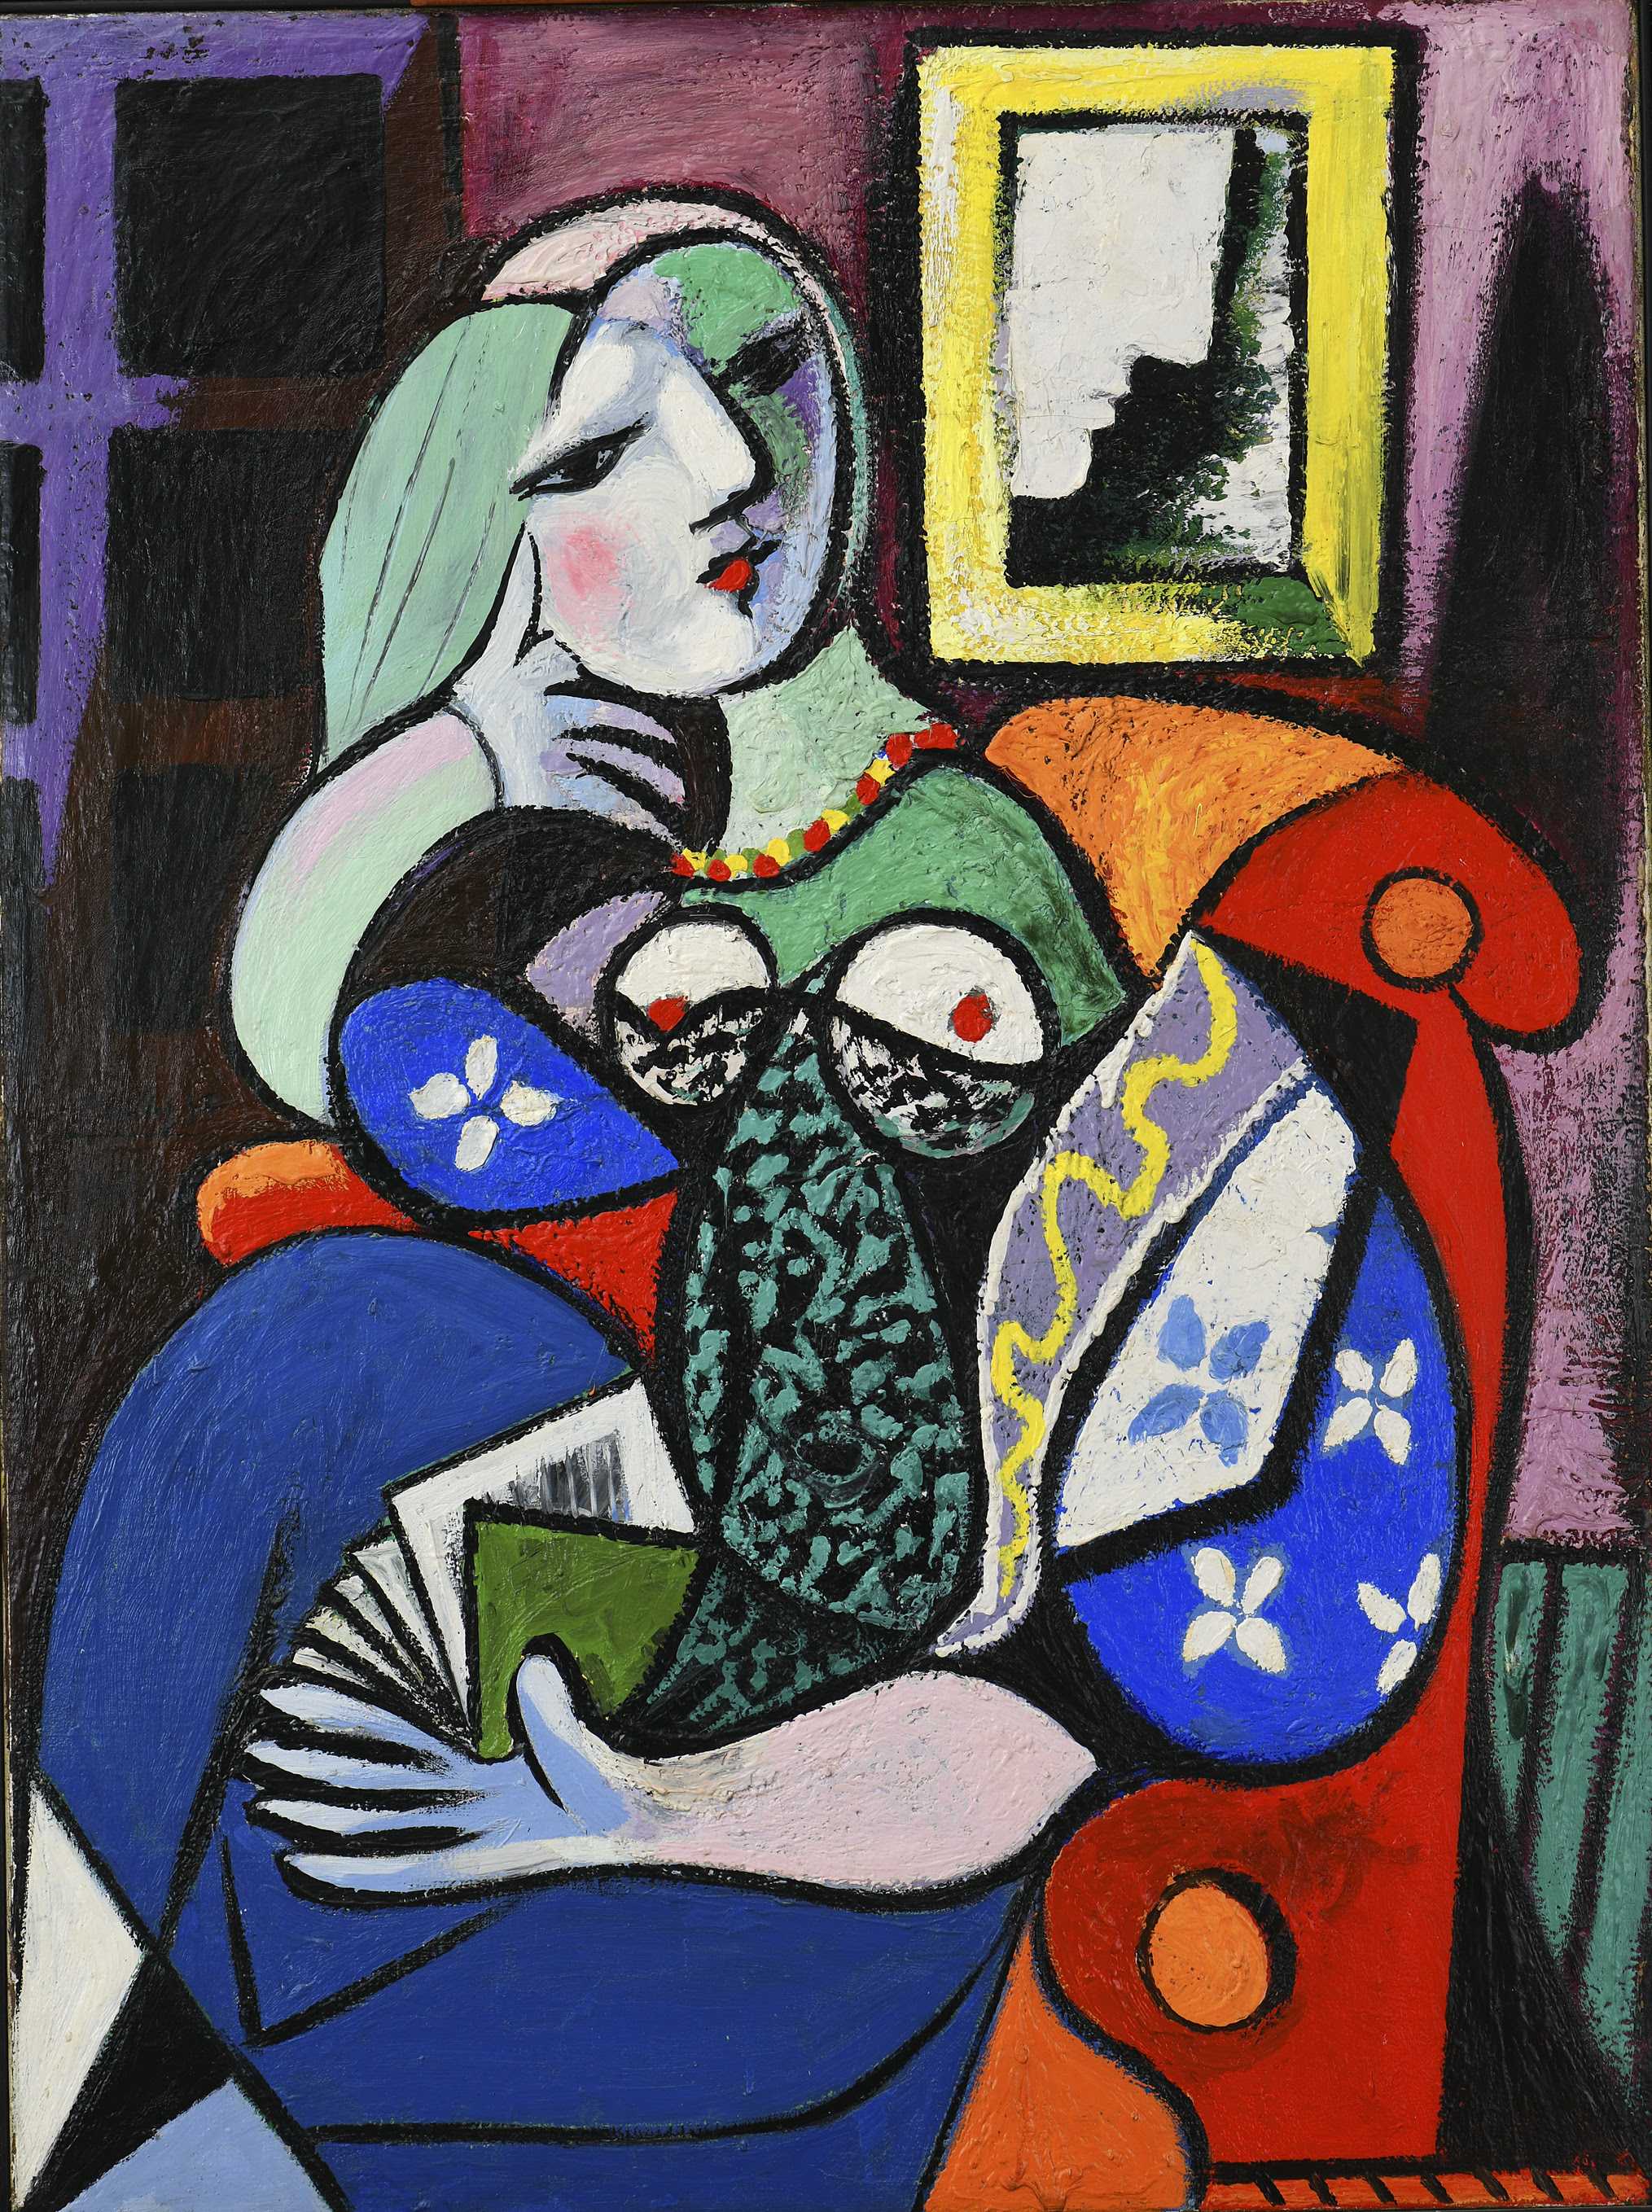 ablo Picasso, Woman with a Book, 1932 Oil on canvas, 130.5 x 97.8 cm The Norton Simon Foundation © Succession Picasso/DACS 2021 / photo The Norton Simon Foundation 